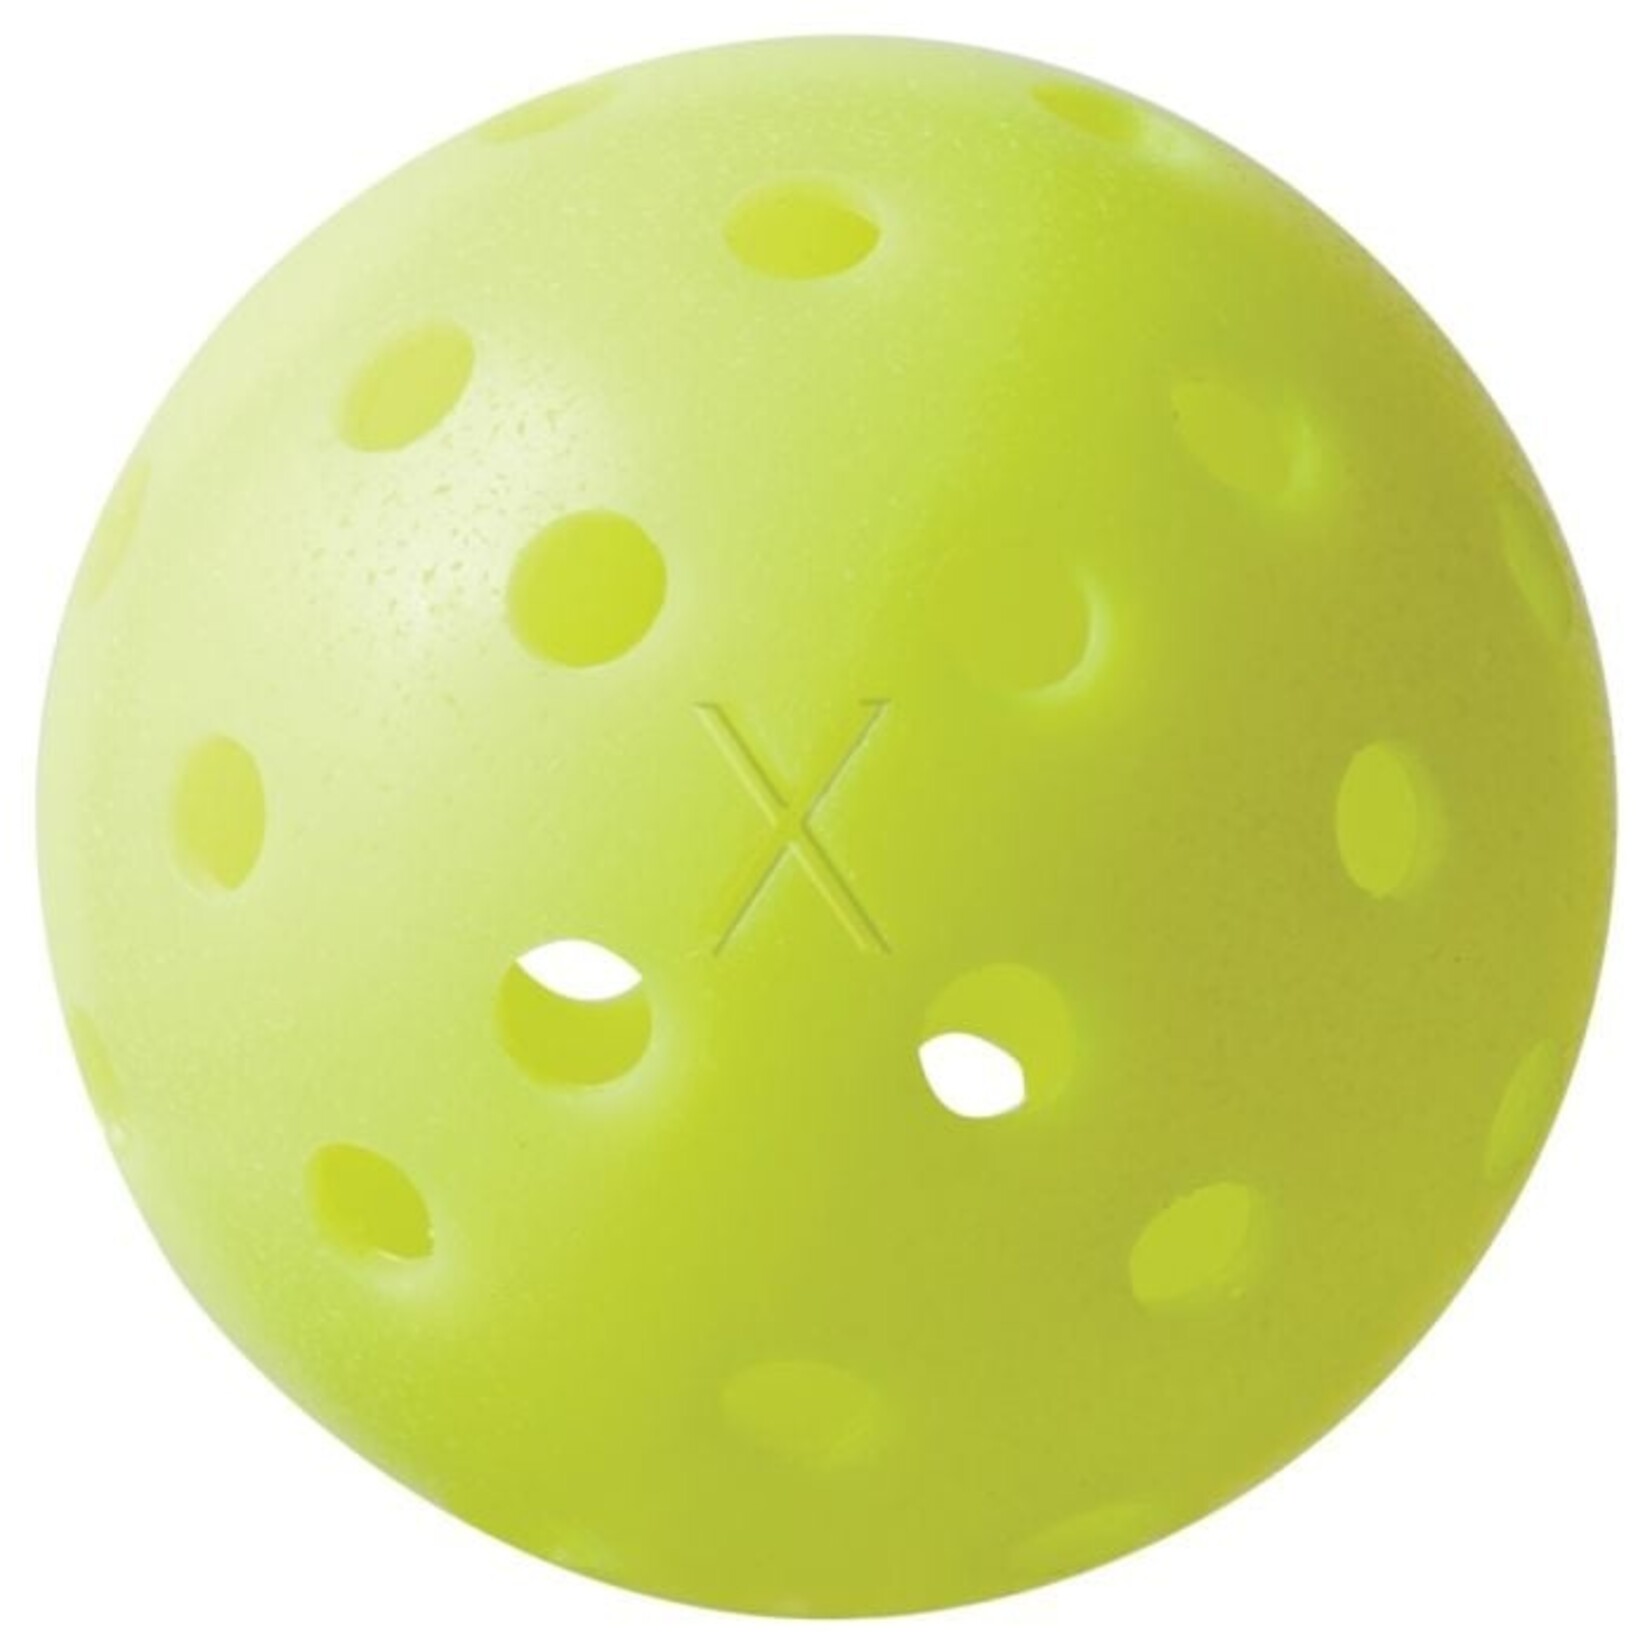 FRANKLIN X-40 OUTDOOR PICKLEBALLS - Case of 3 Balls